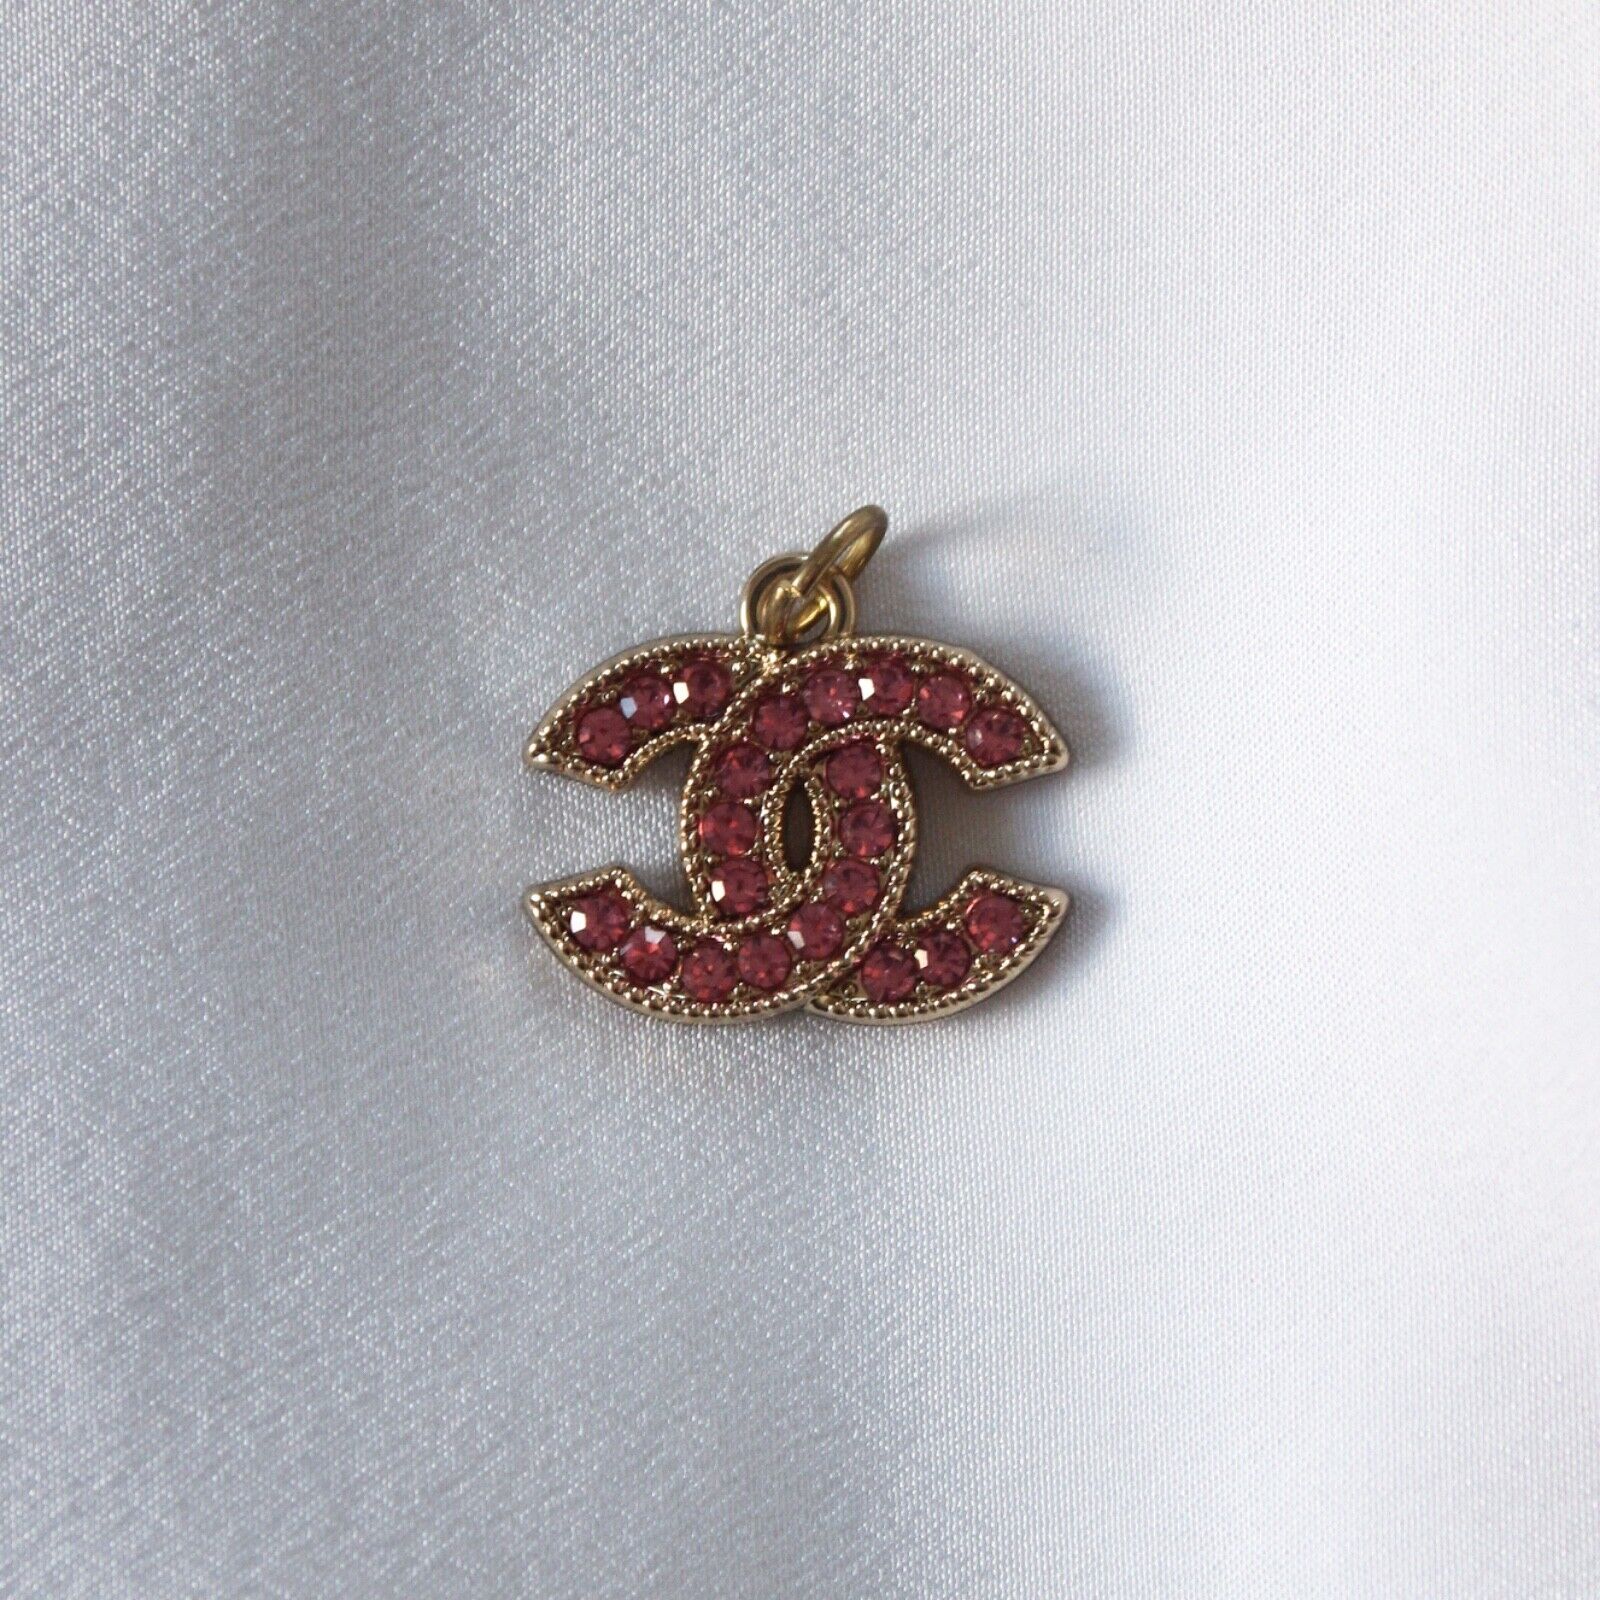 Chanel Zipper Pull Pendant, Pink Rhinestones, Gold, 22mm, Stamped